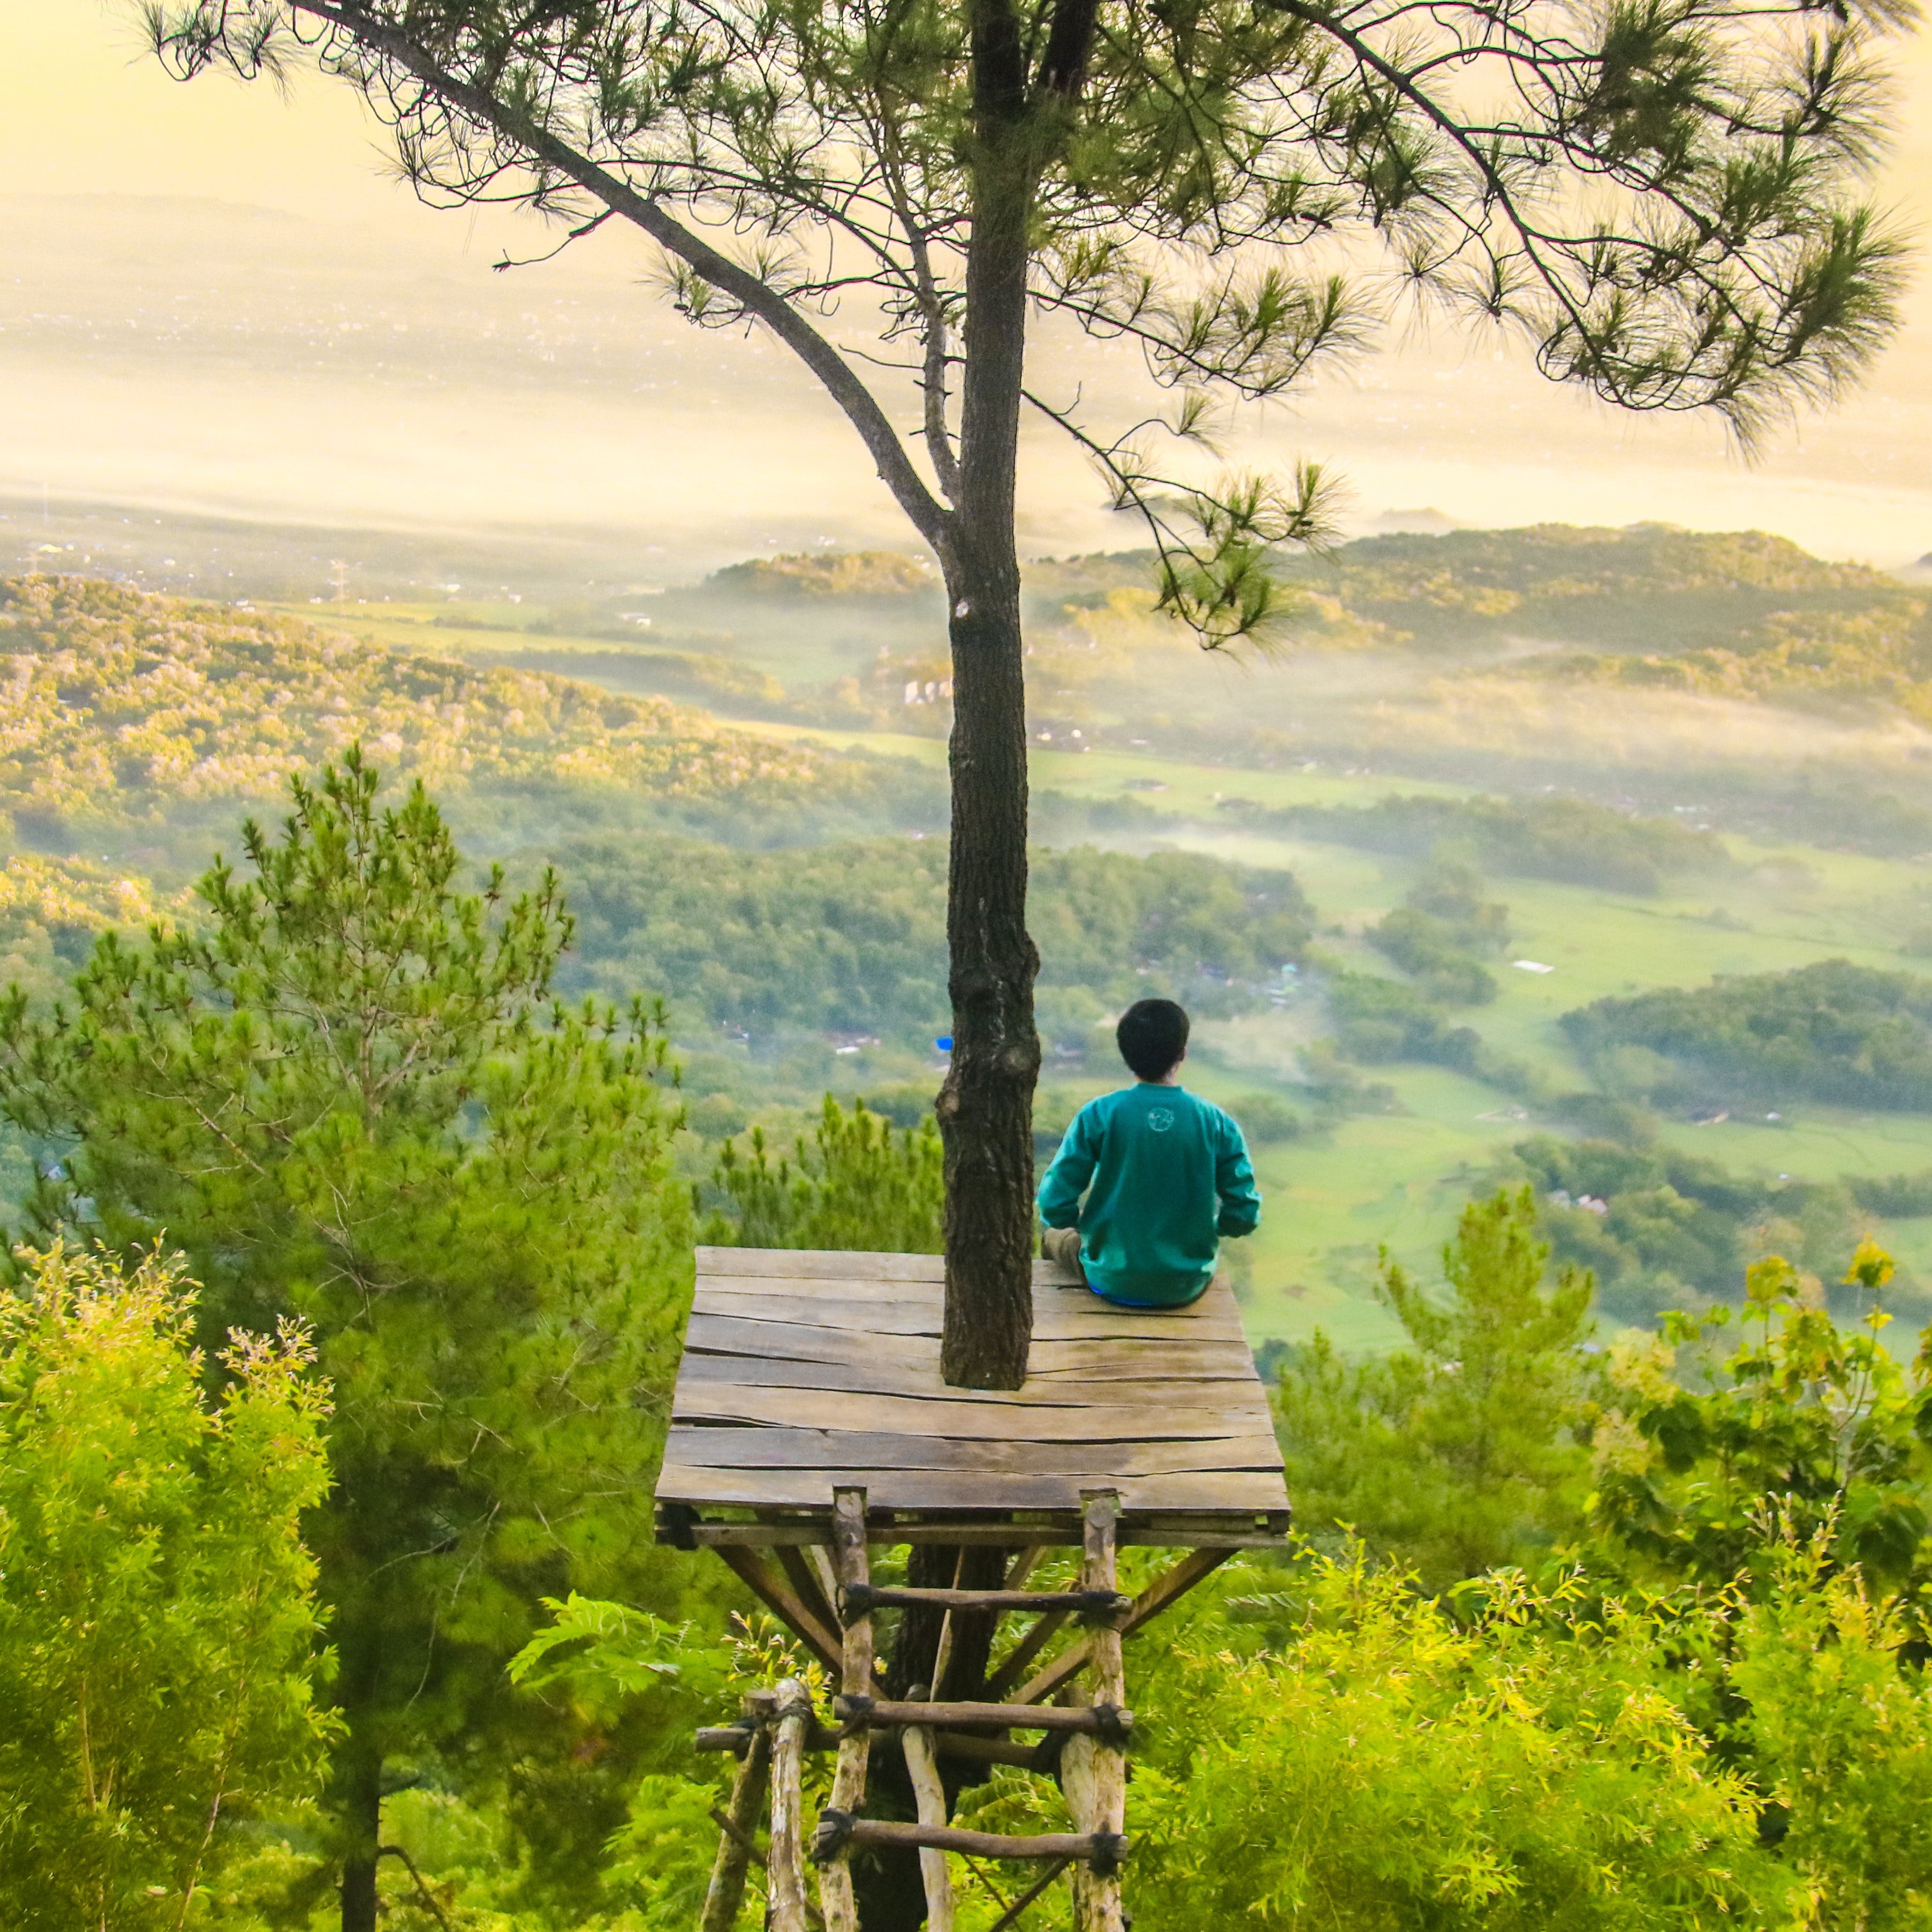 Un garçon assie seul dans un arbre. | Photo : Pexels